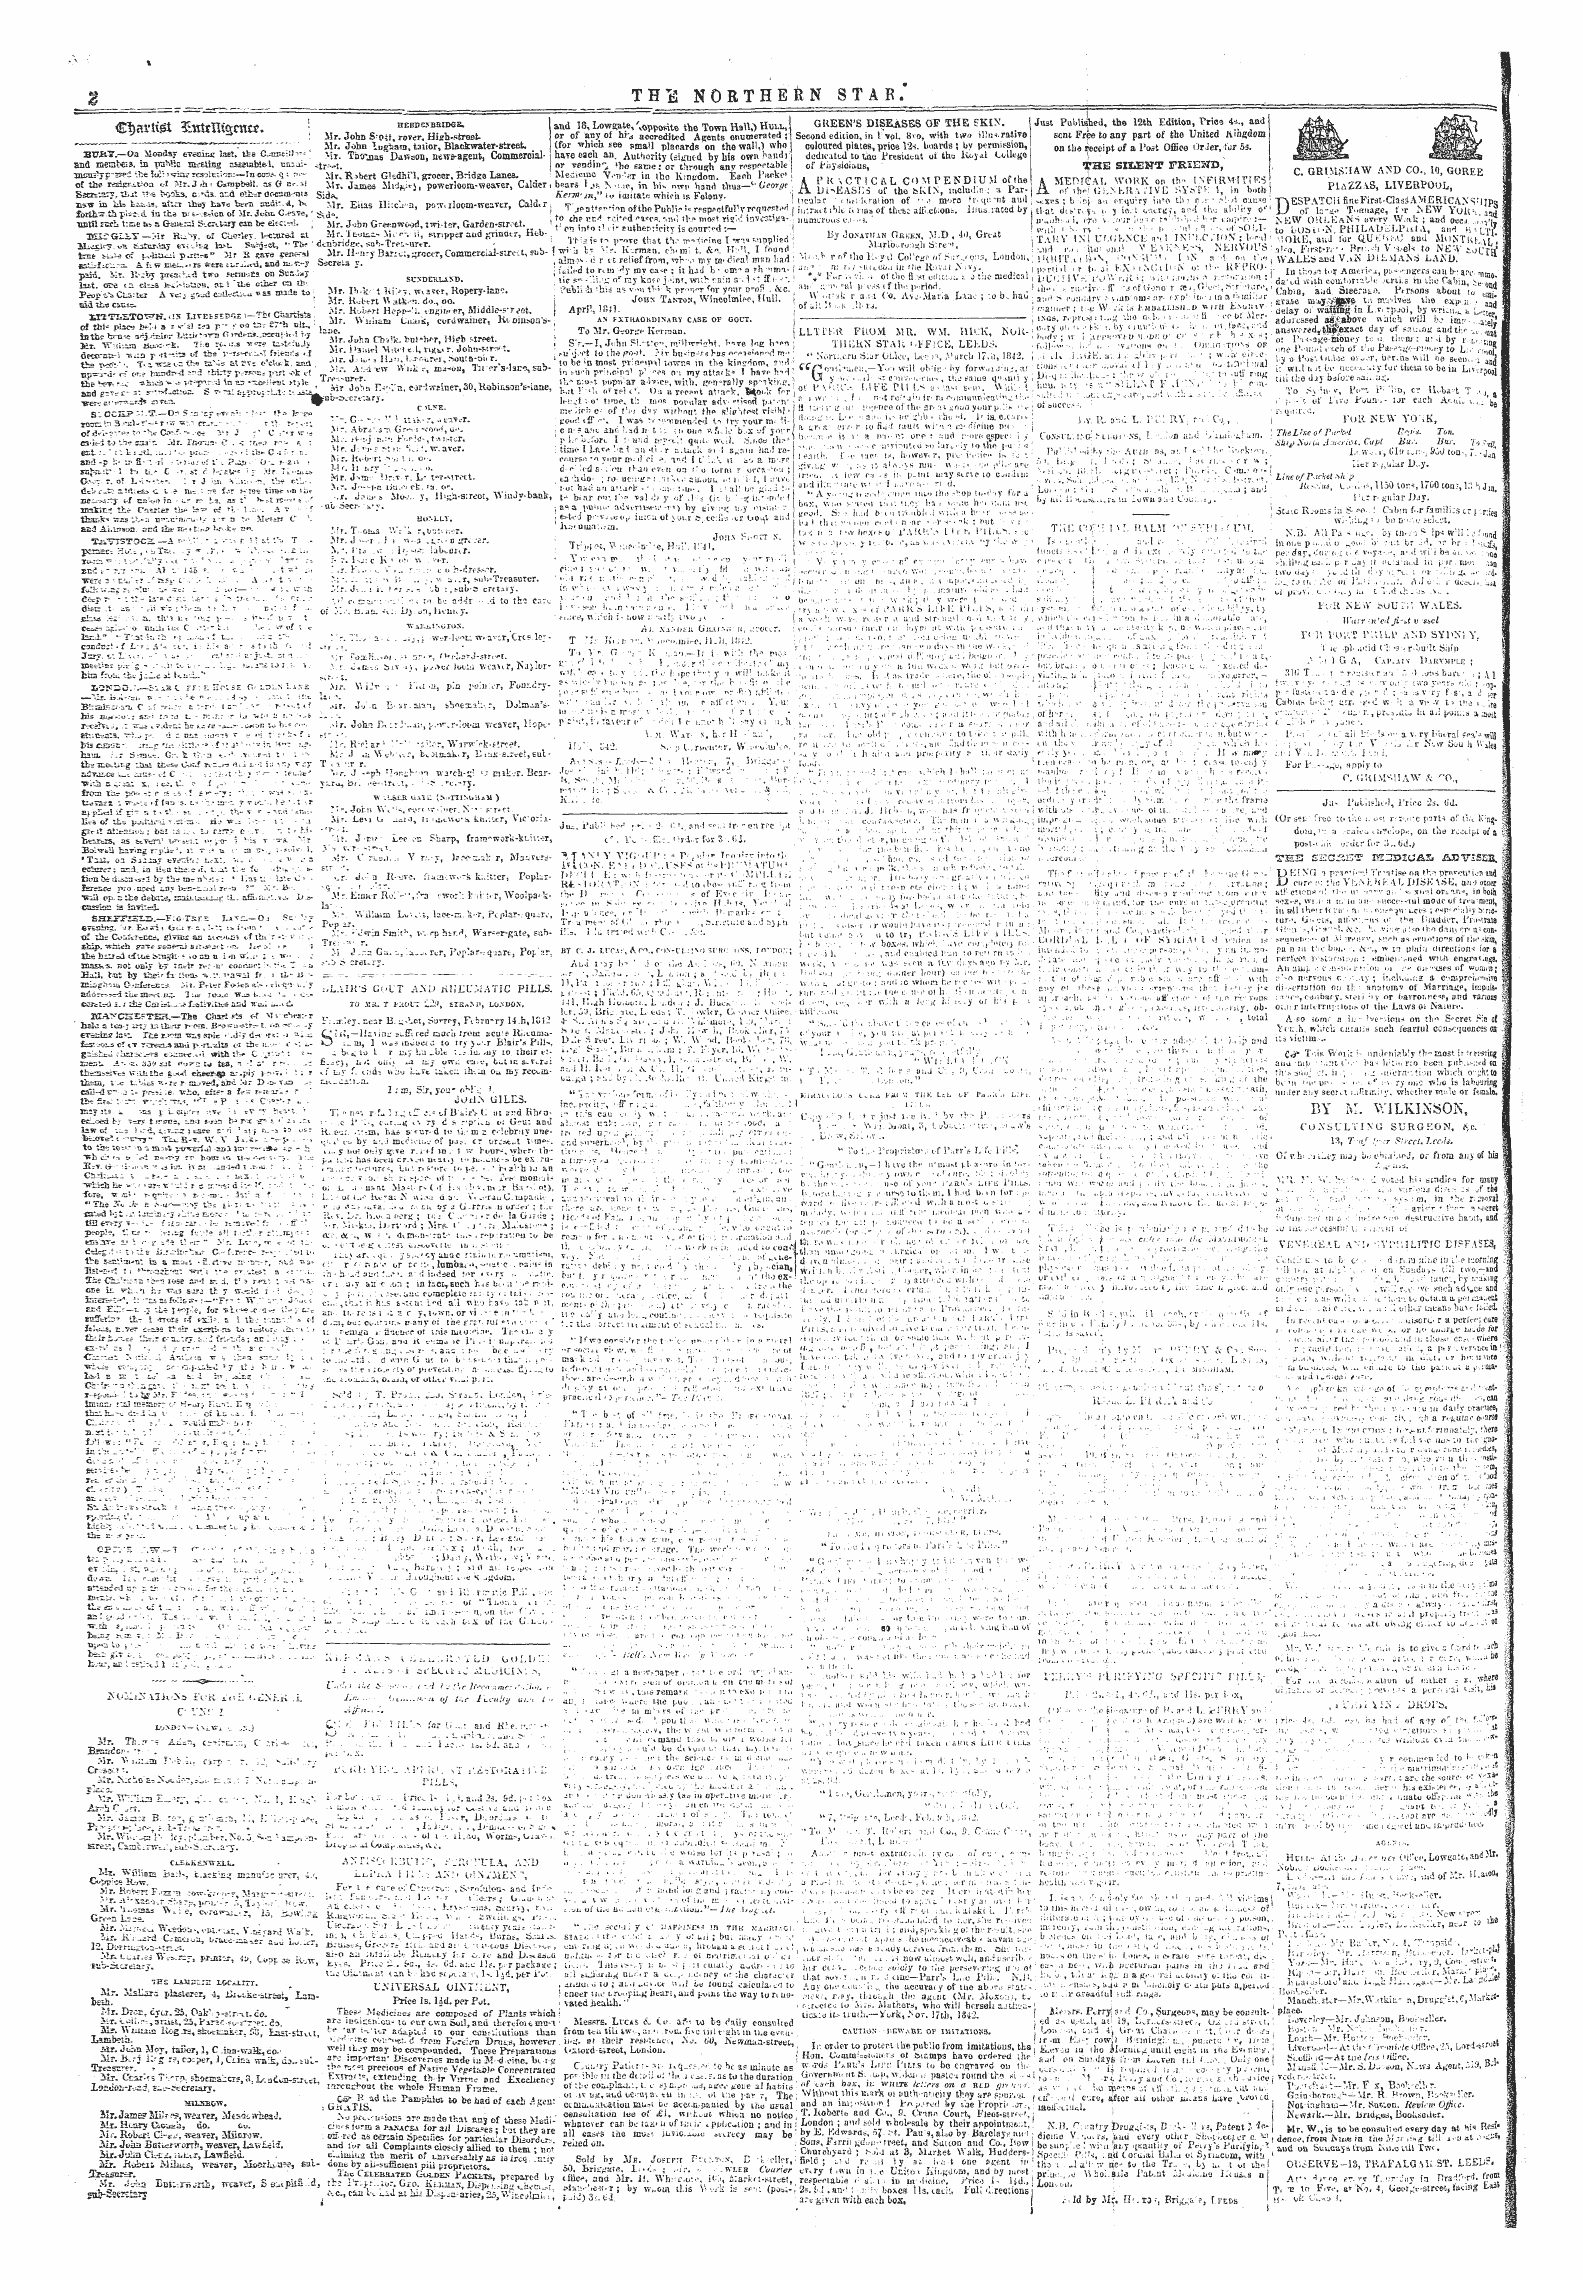 Northern Star (1837-1852): jS F Y, 5th edition - Ad00212